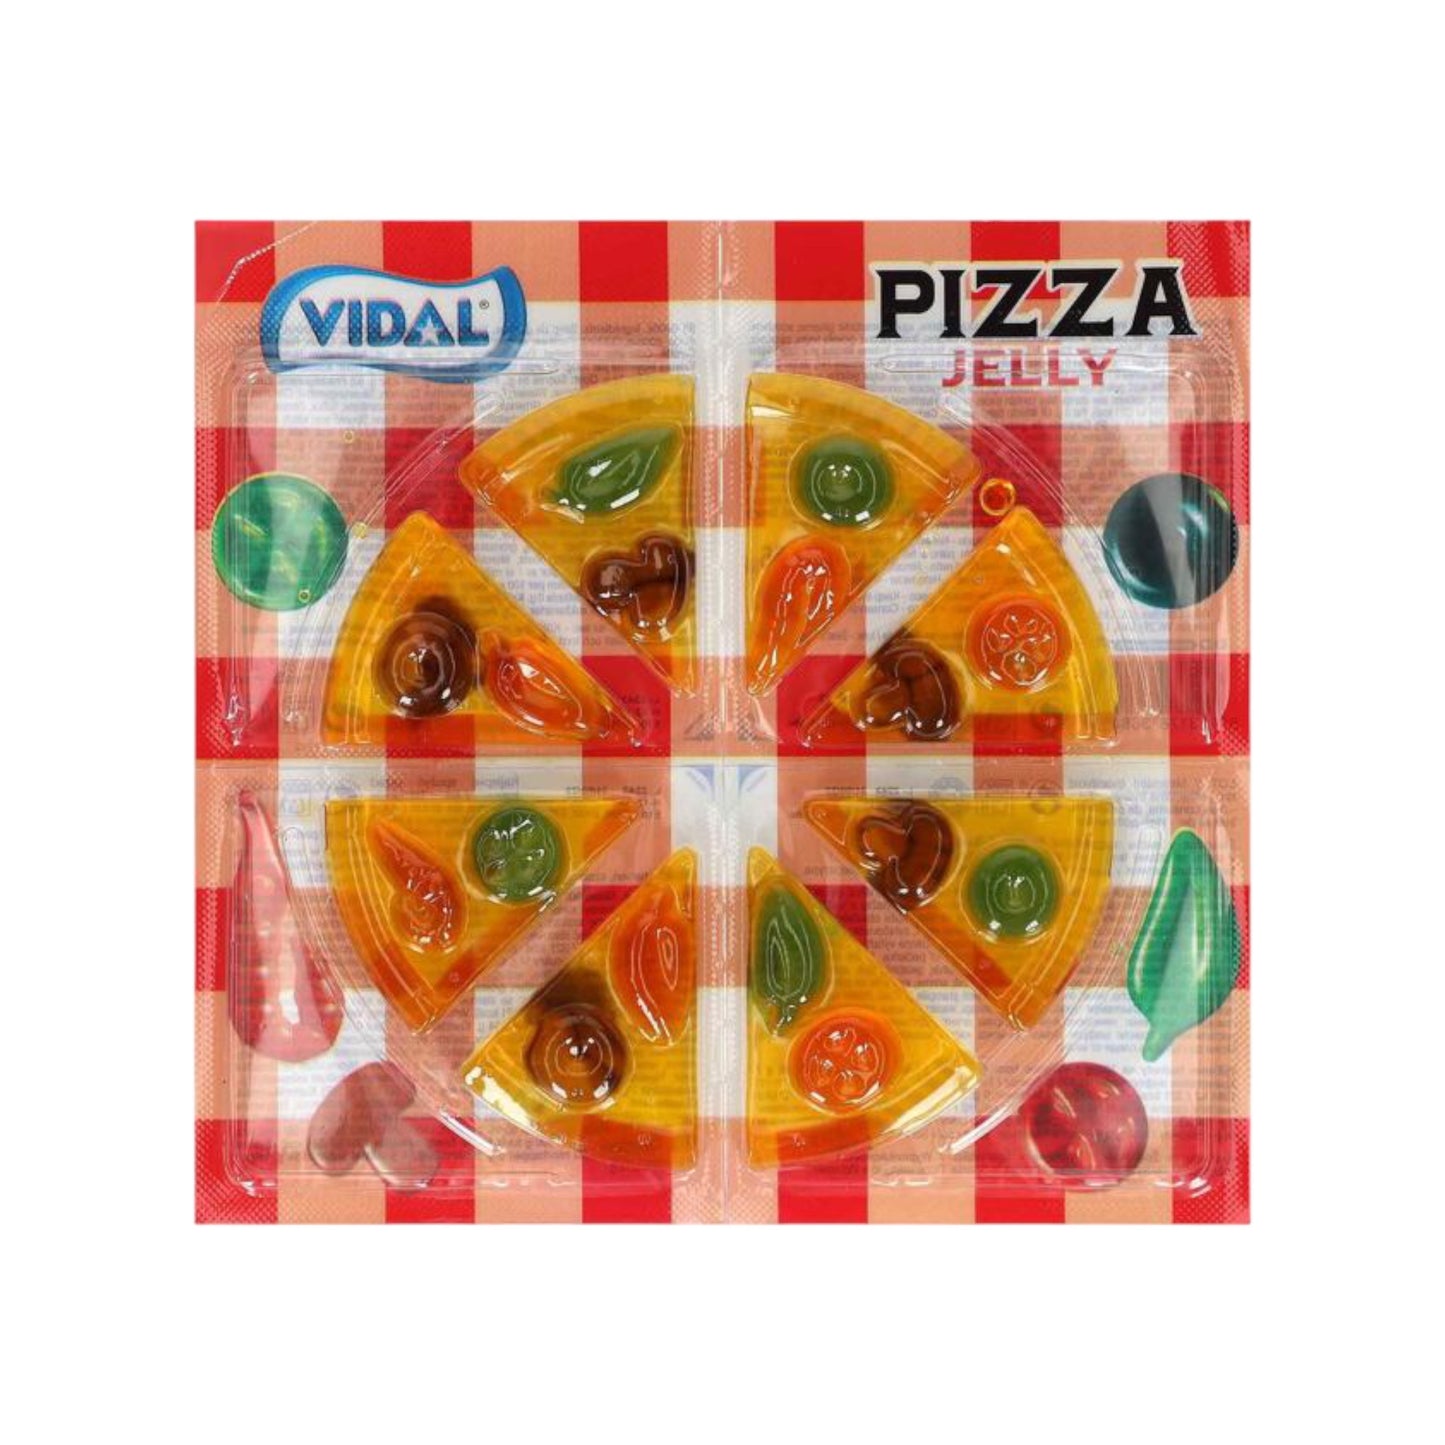 Vidal Pizza Jelly - 66g